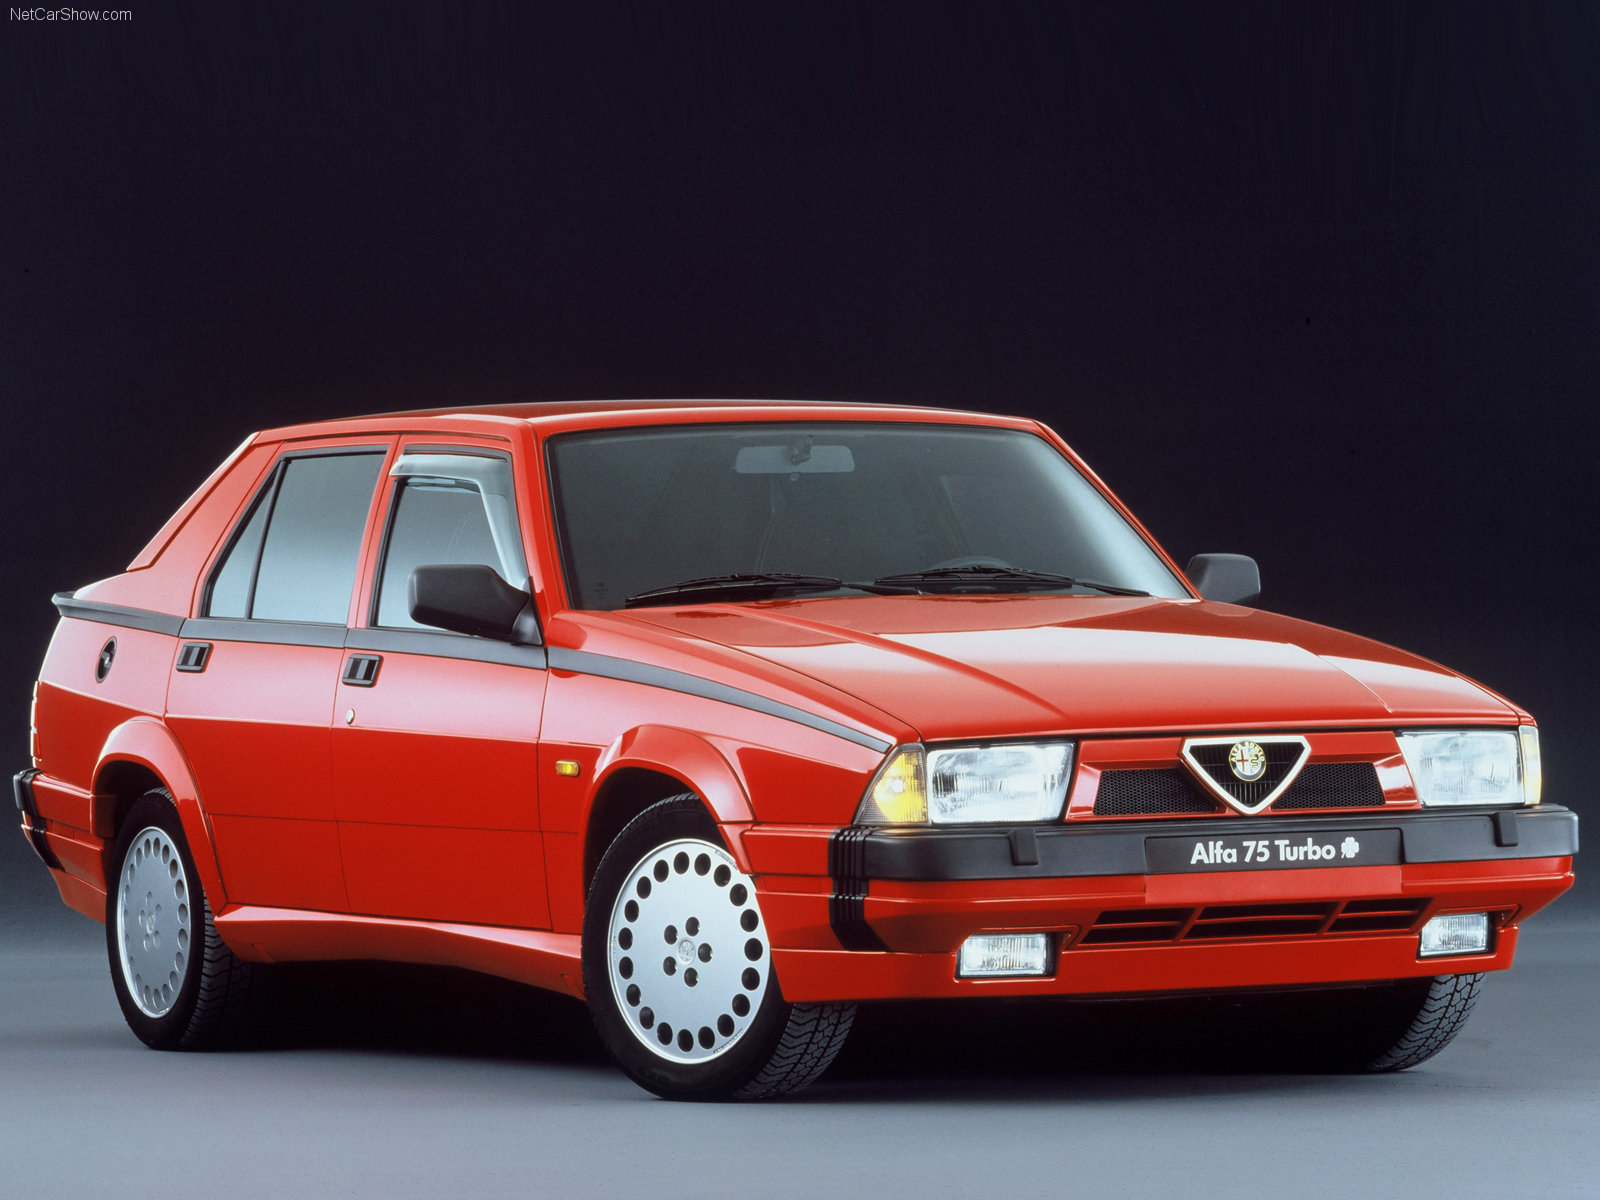 Alfa romeo 75 1.8 turbo (511 commentaires) Vues 33195 Évaluation 13